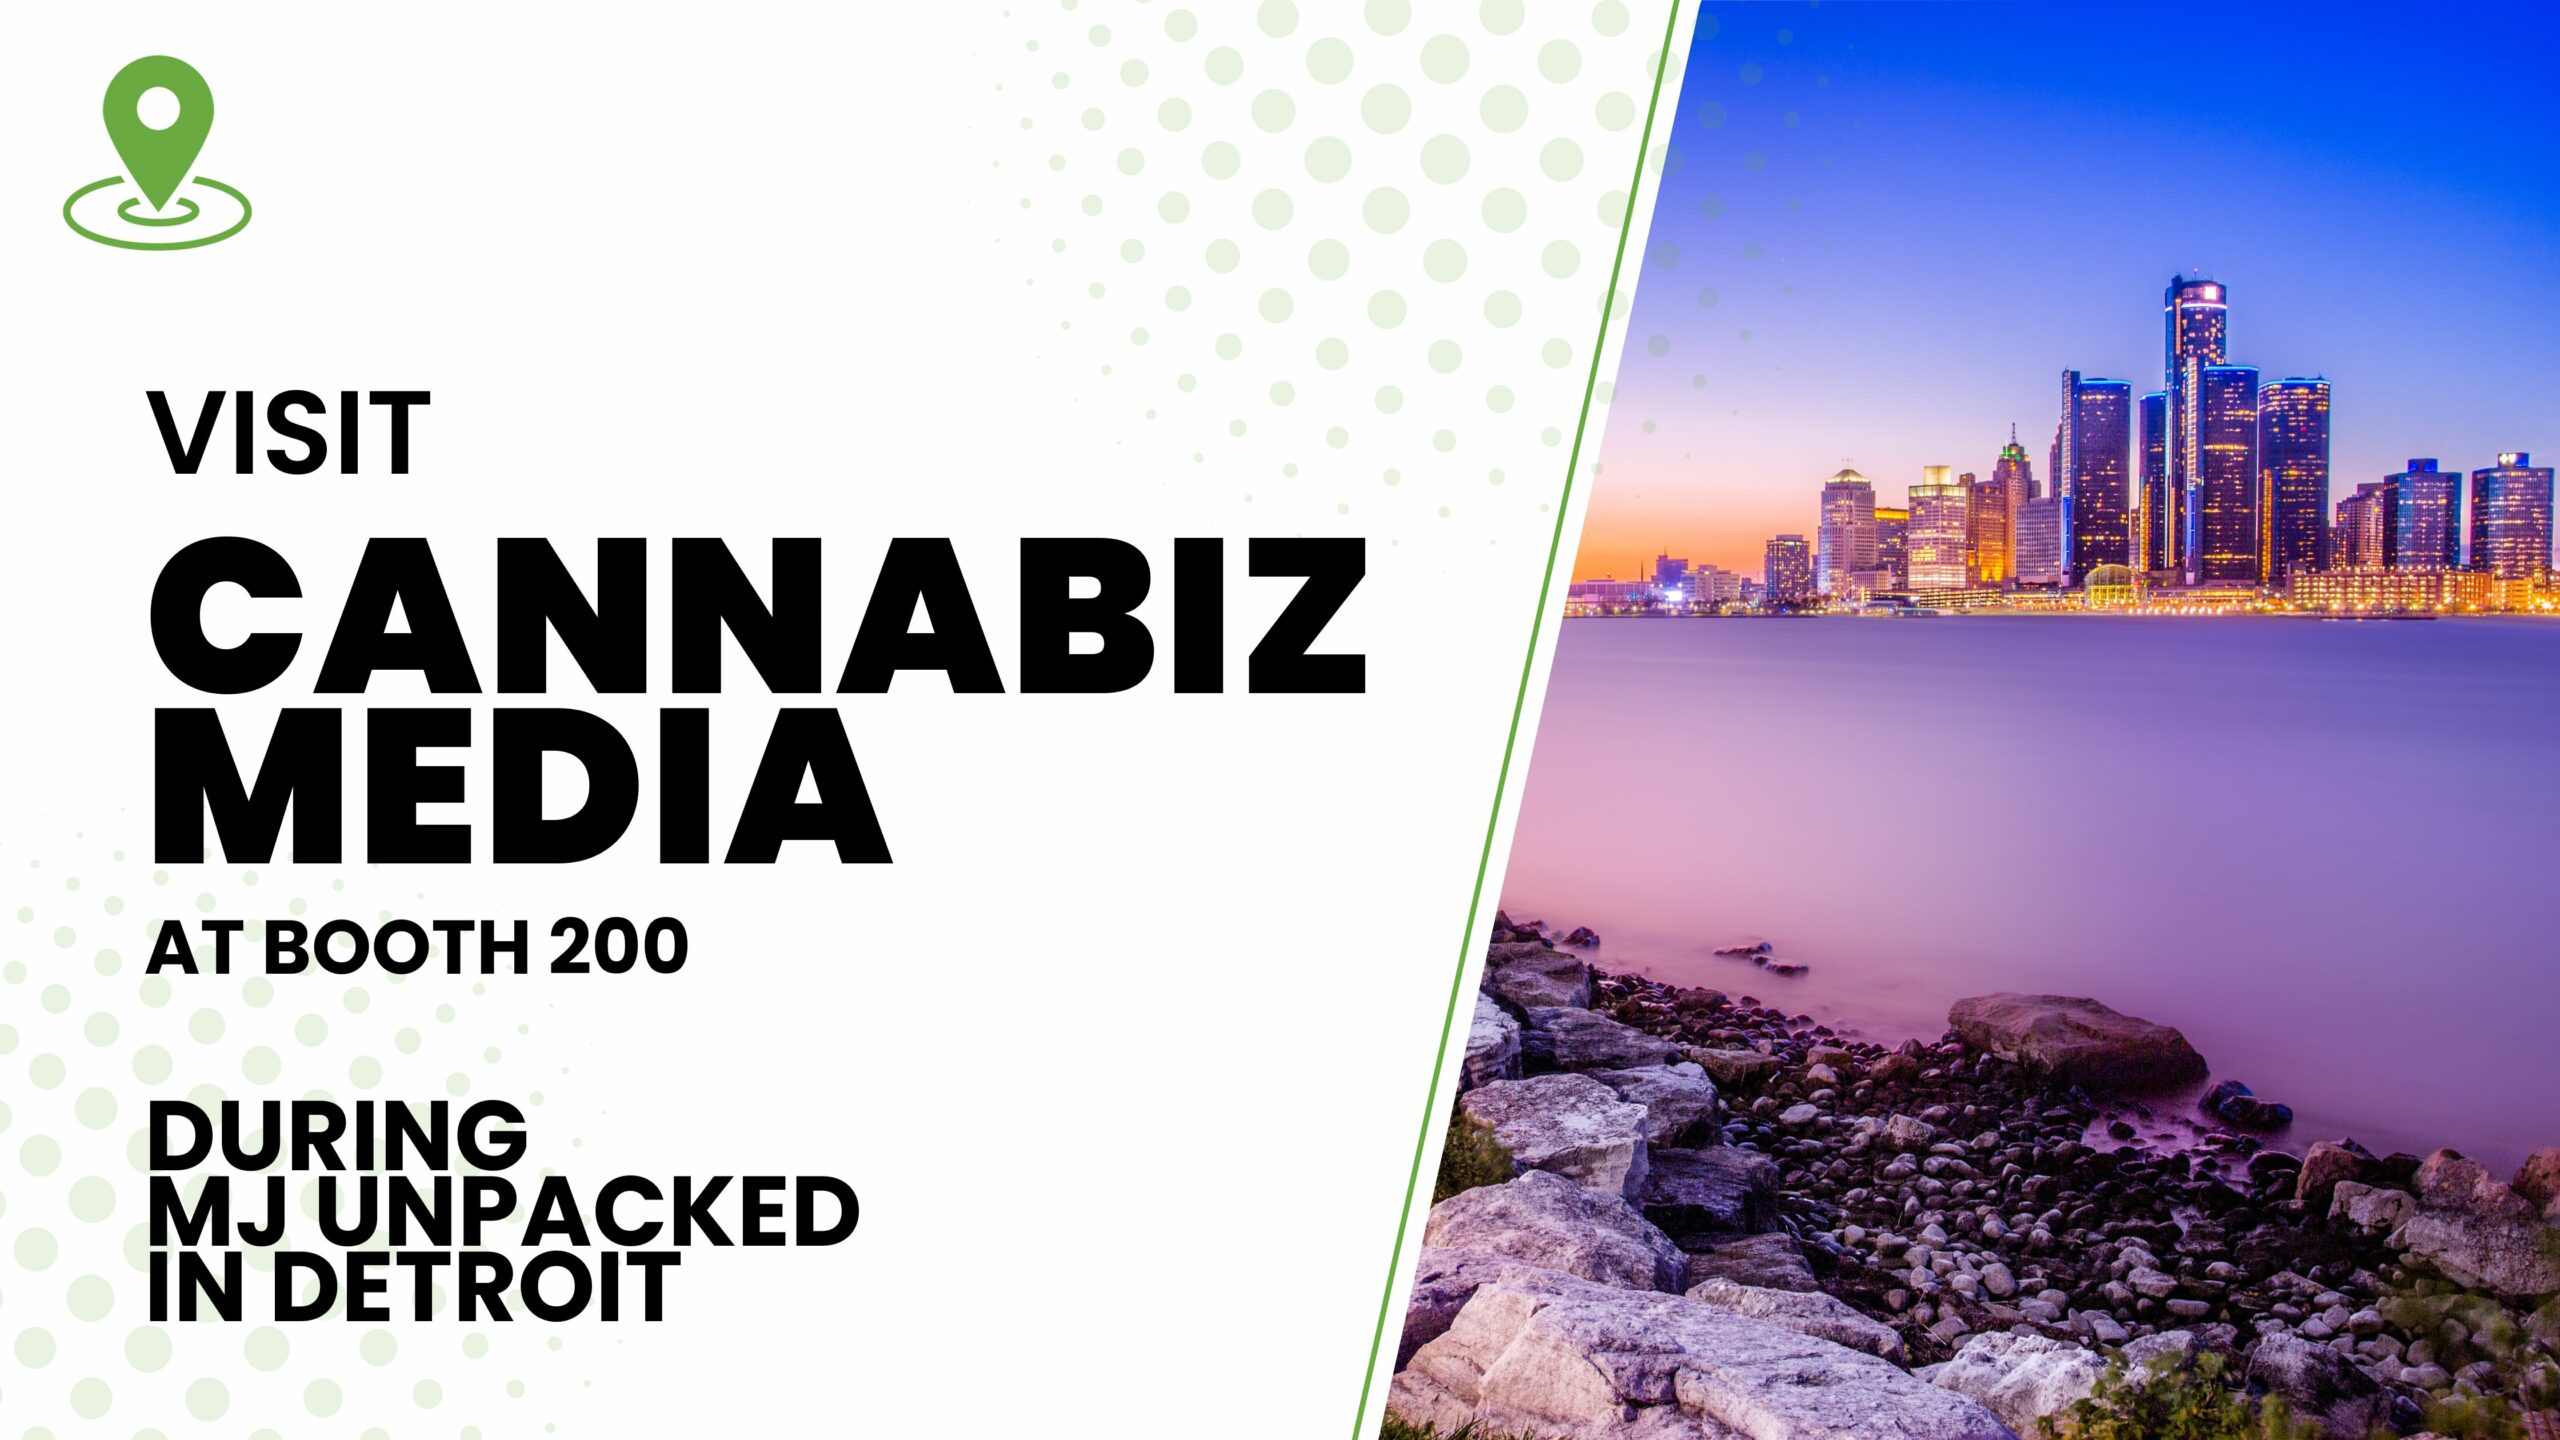 Посетите Cannabiz Media на стенде № 200 во время MJ Unpacked в Детройте | Каннабиз Медиа